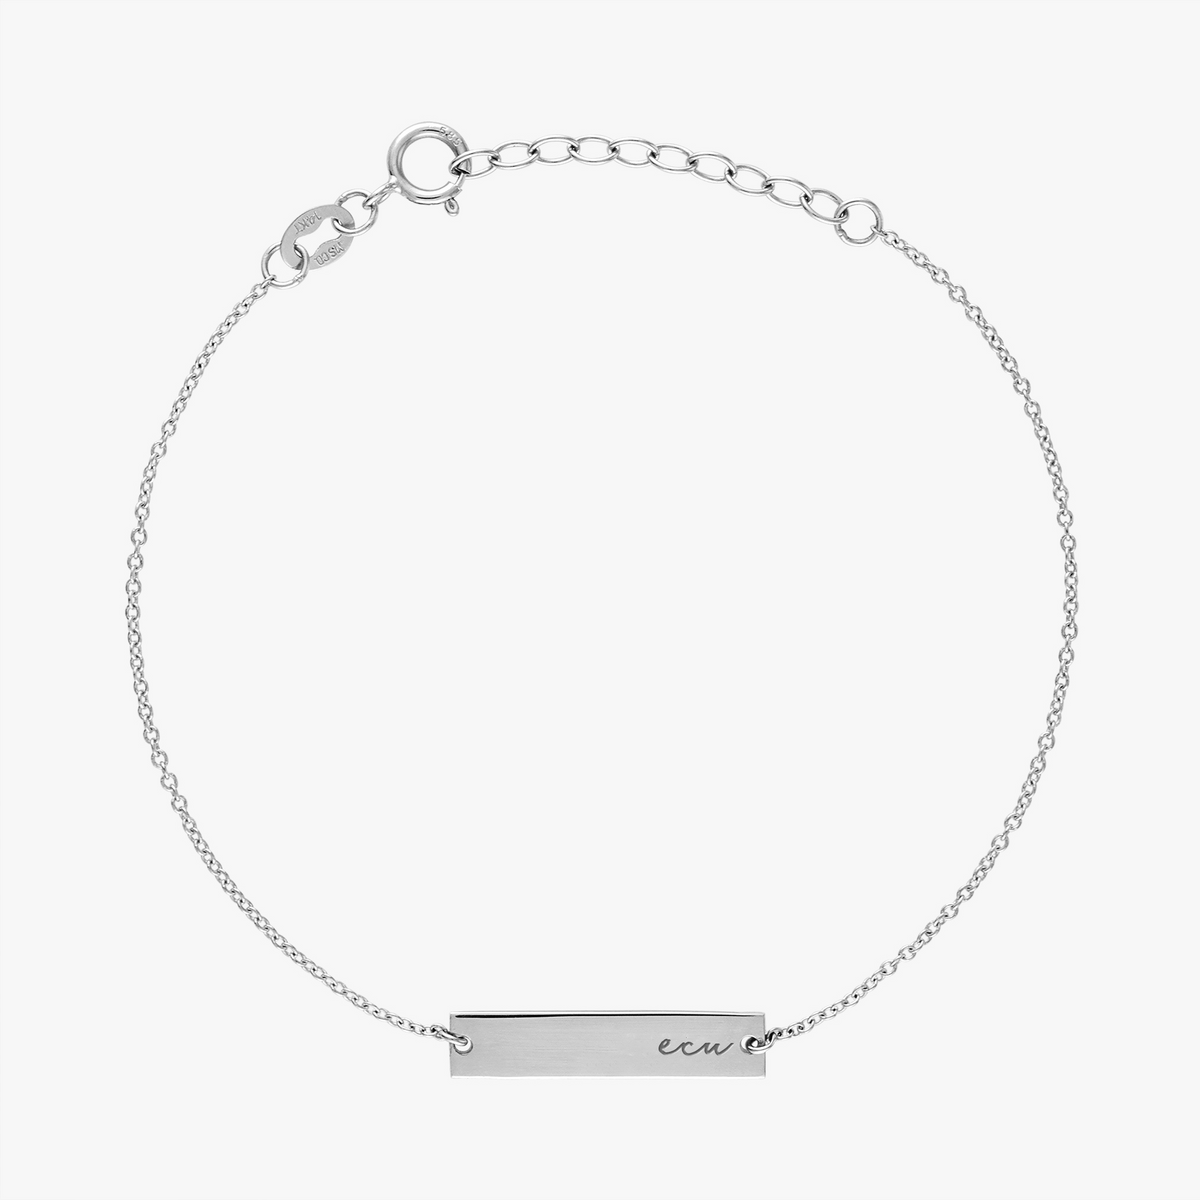 ECU Horizontal Necklace Sterling Silver